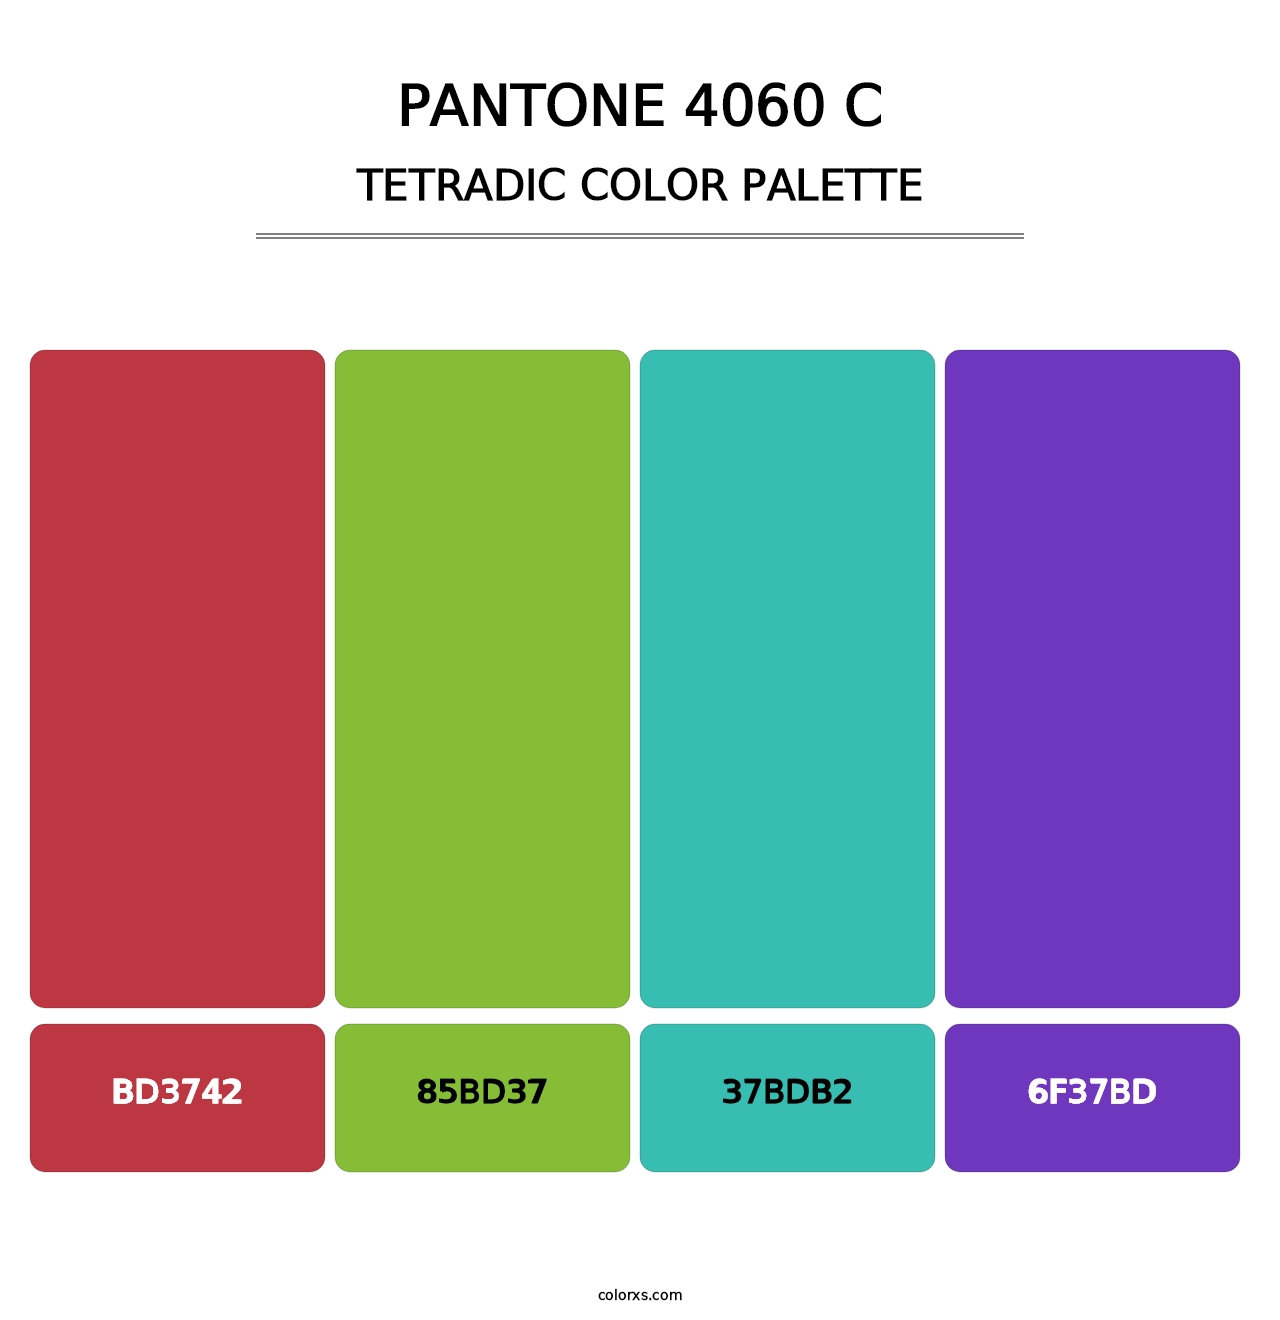 PANTONE 4060 C - Tetradic Color Palette